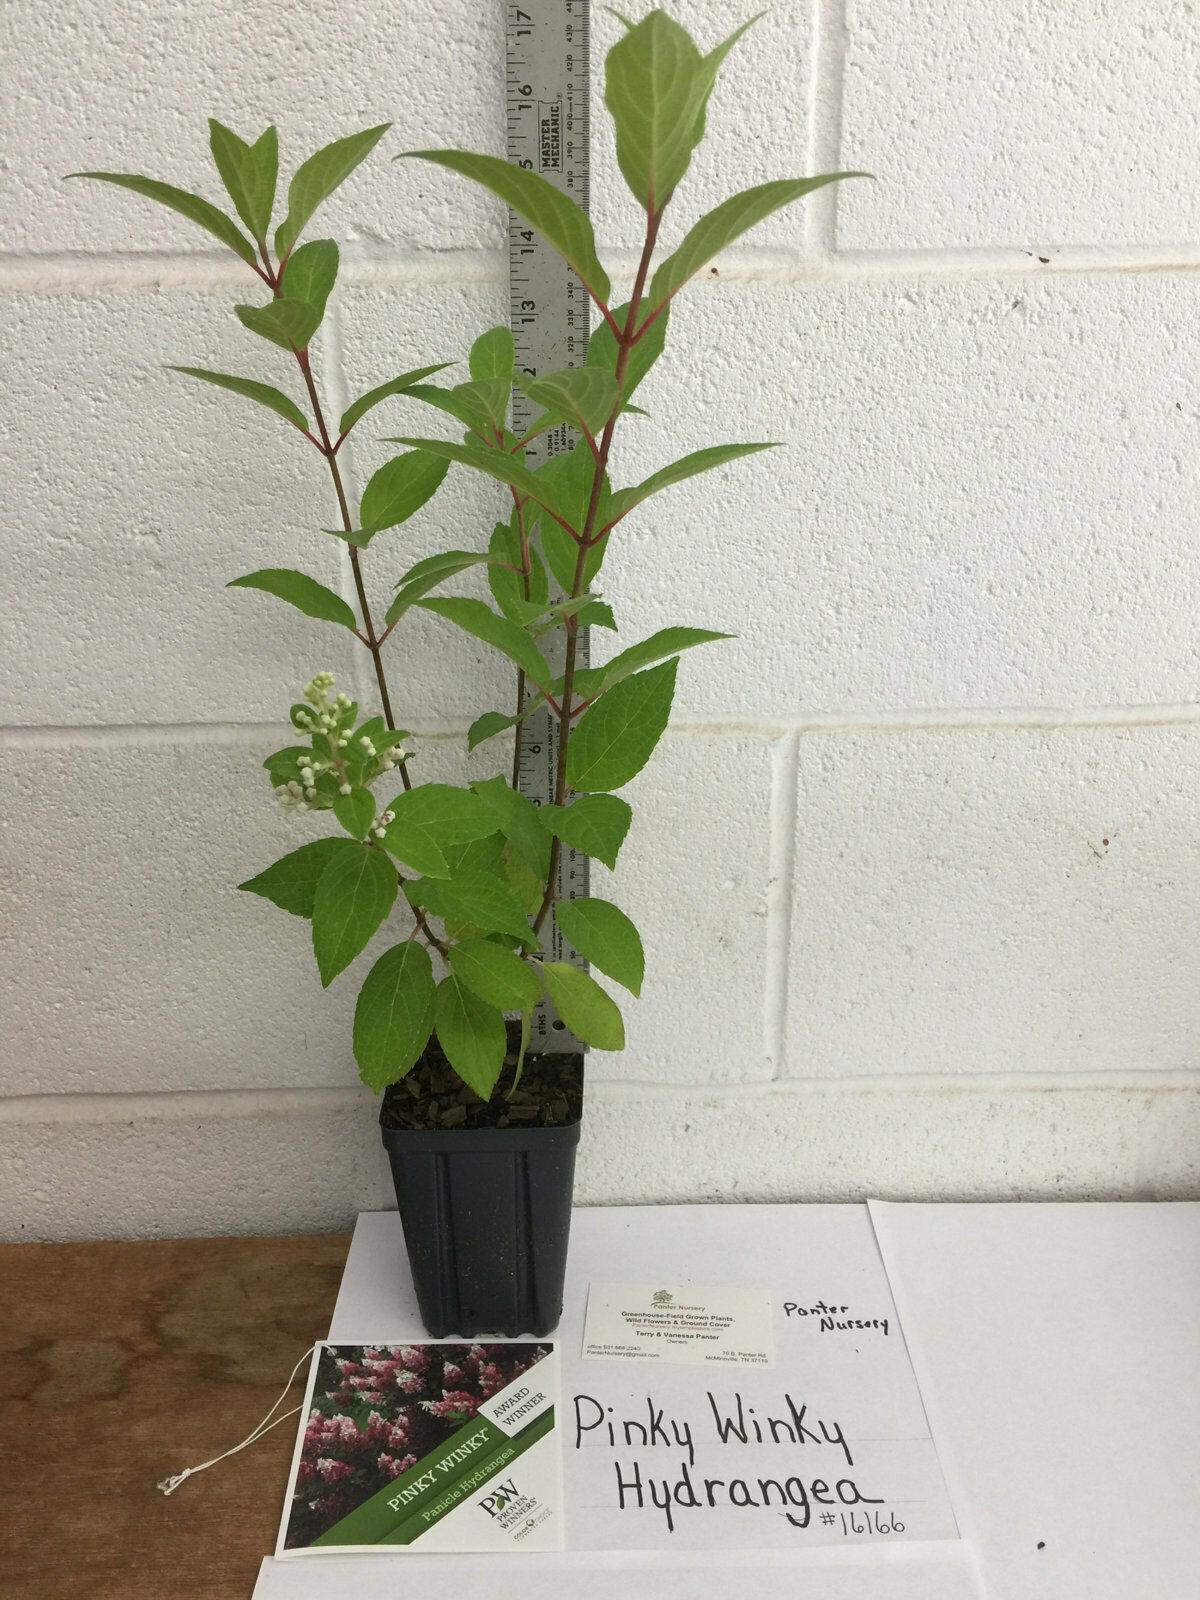 Pinky Winky Hydrangea Shrub/Bush - Live Plant - 6-12" Tall, Quart Pot - PP#16166 - The Nursery Center